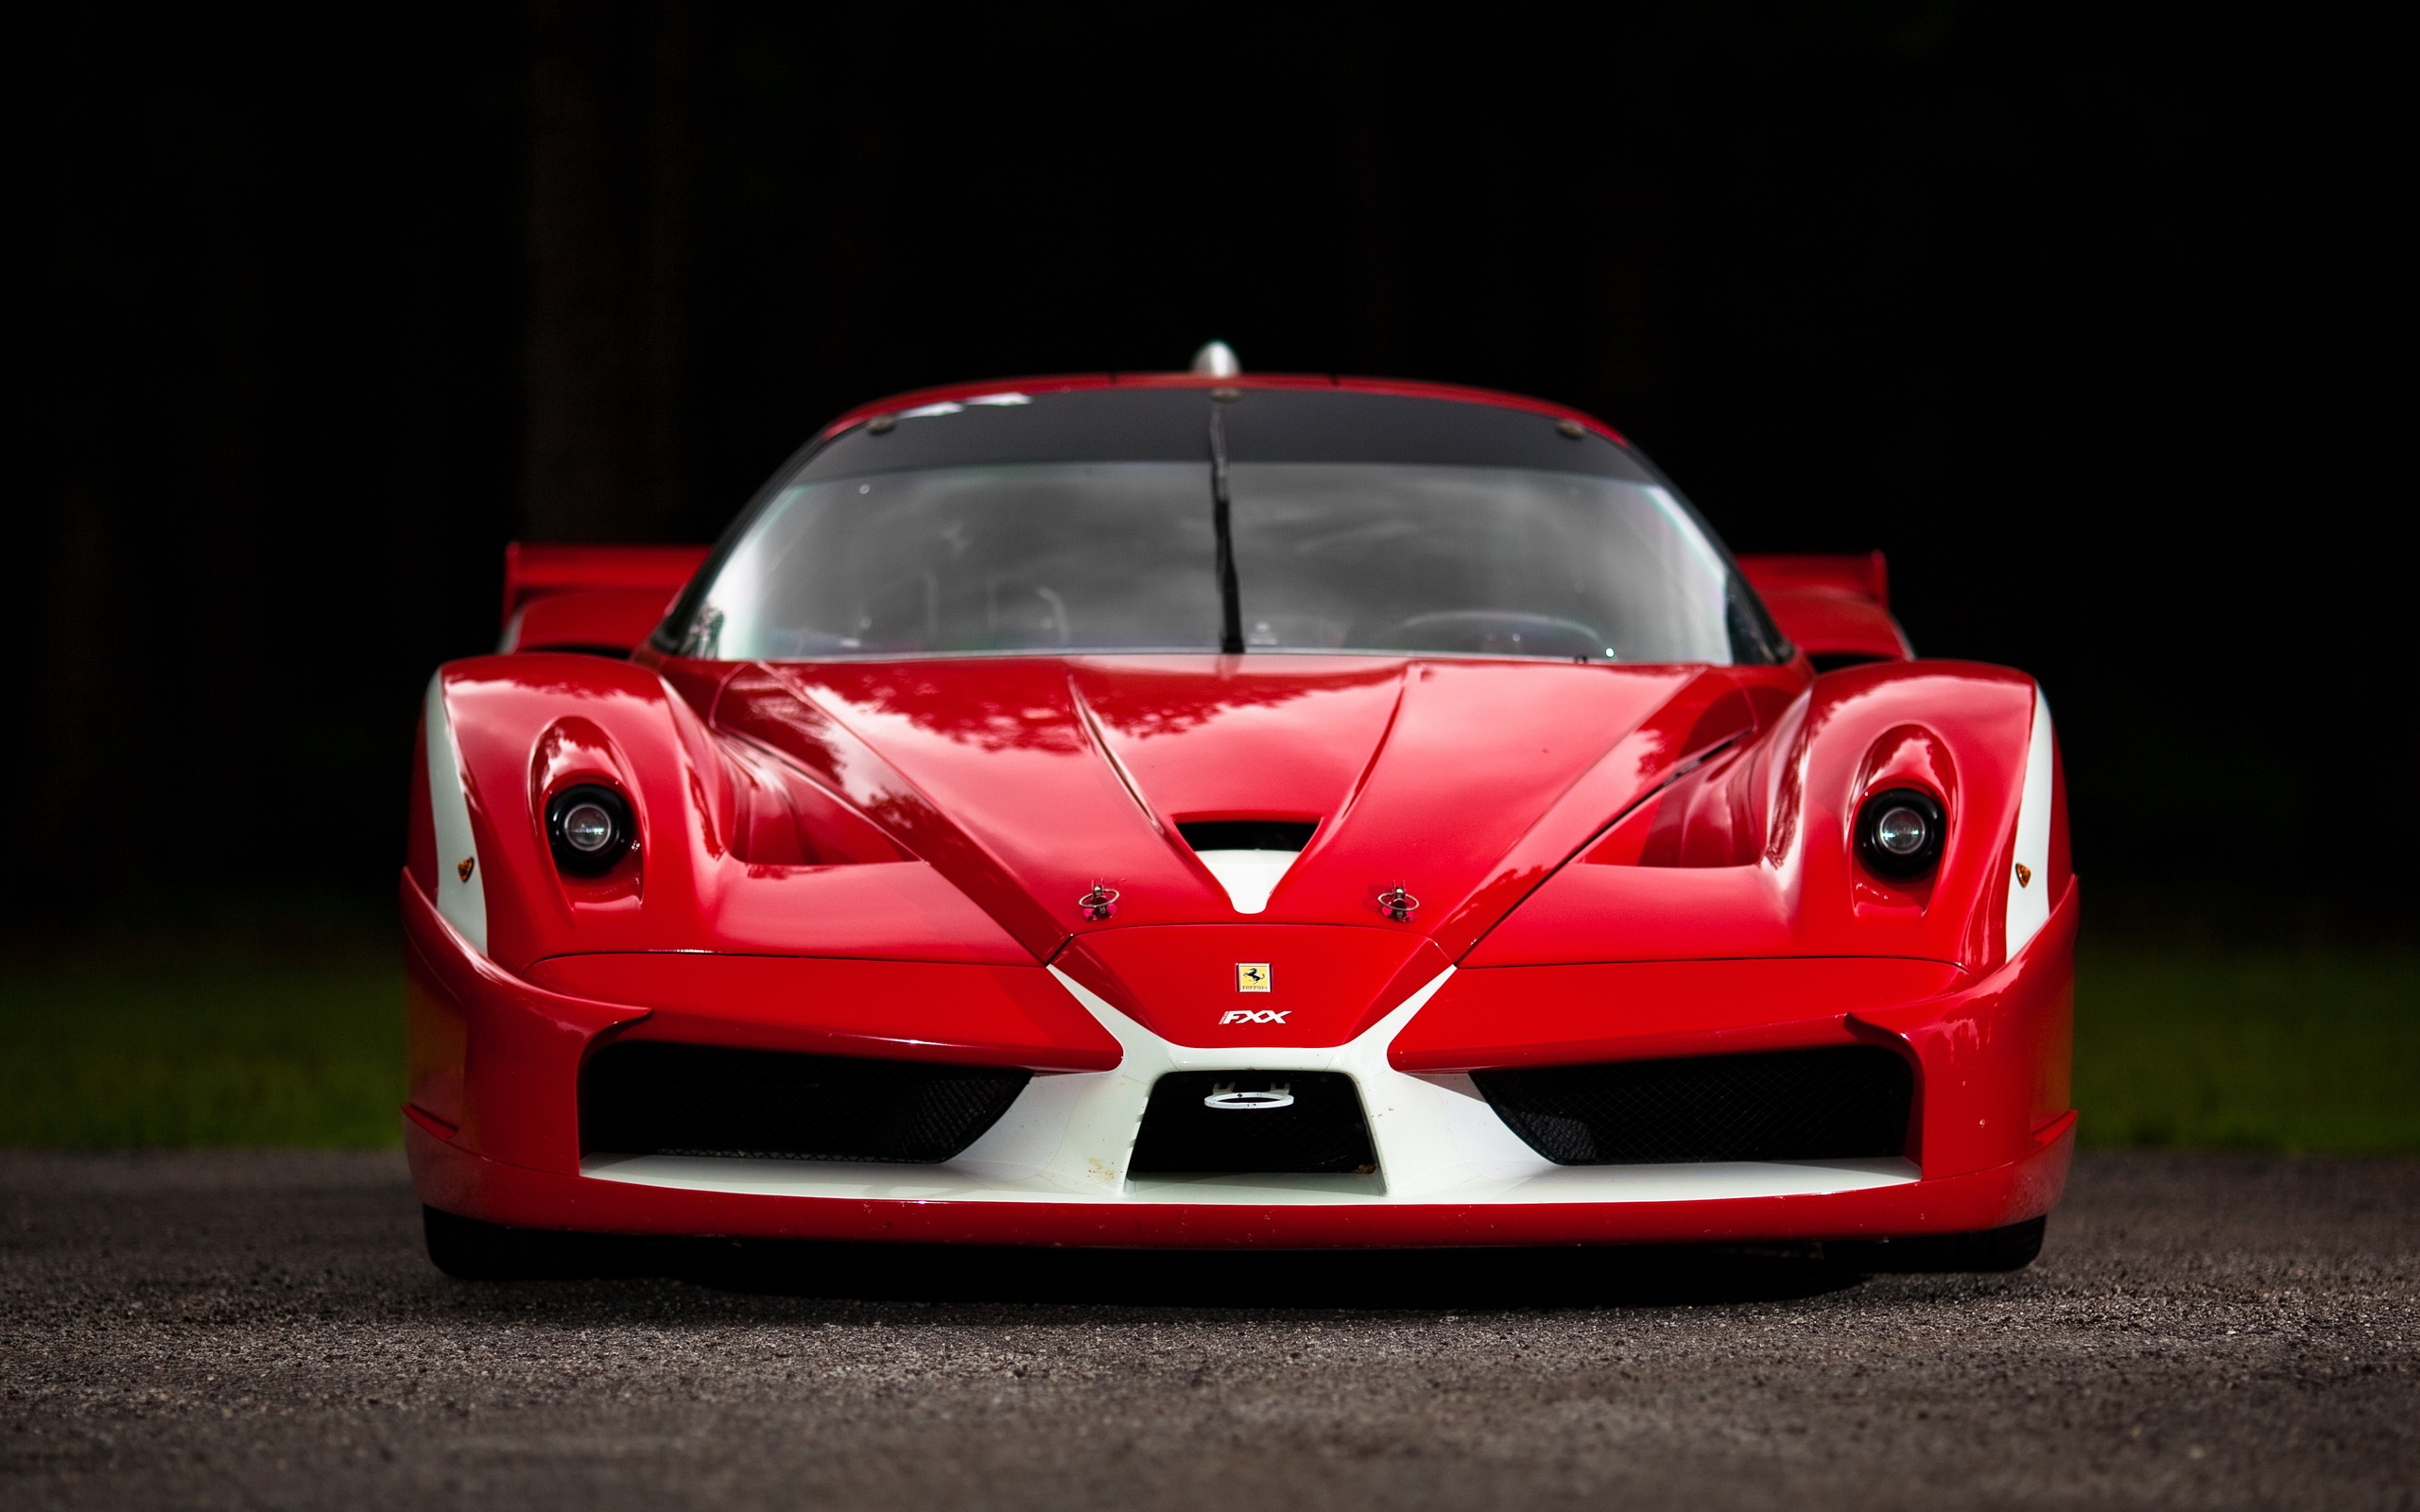 General 2560x1600 car Ferrari Ferrari FXX red cars vehicle supercars italian cars Stellantis